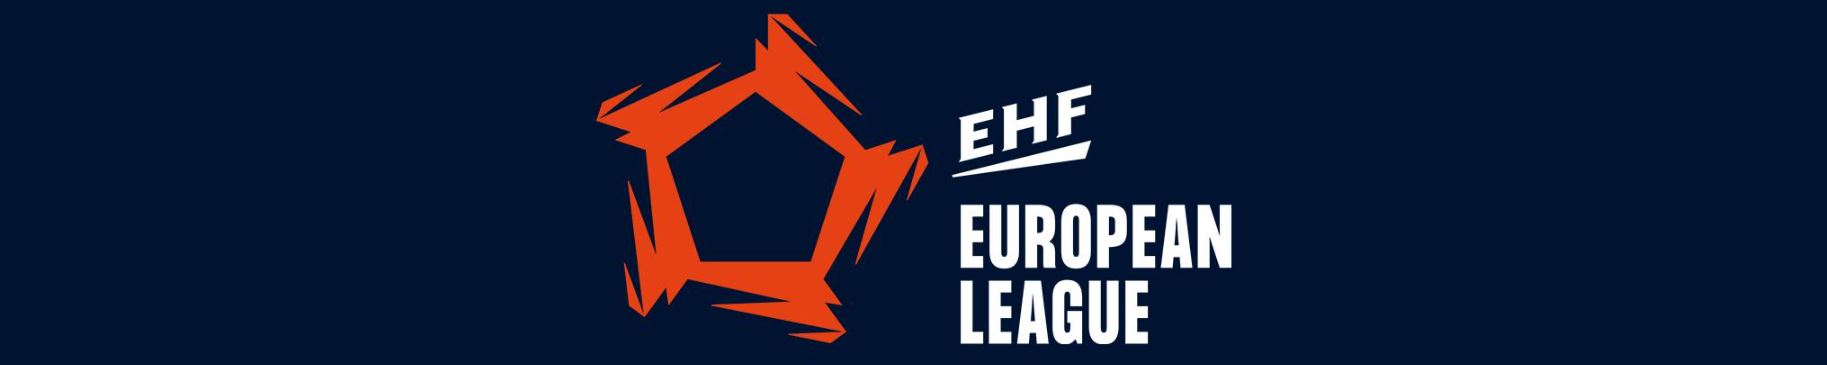 Bandeau European League Hand